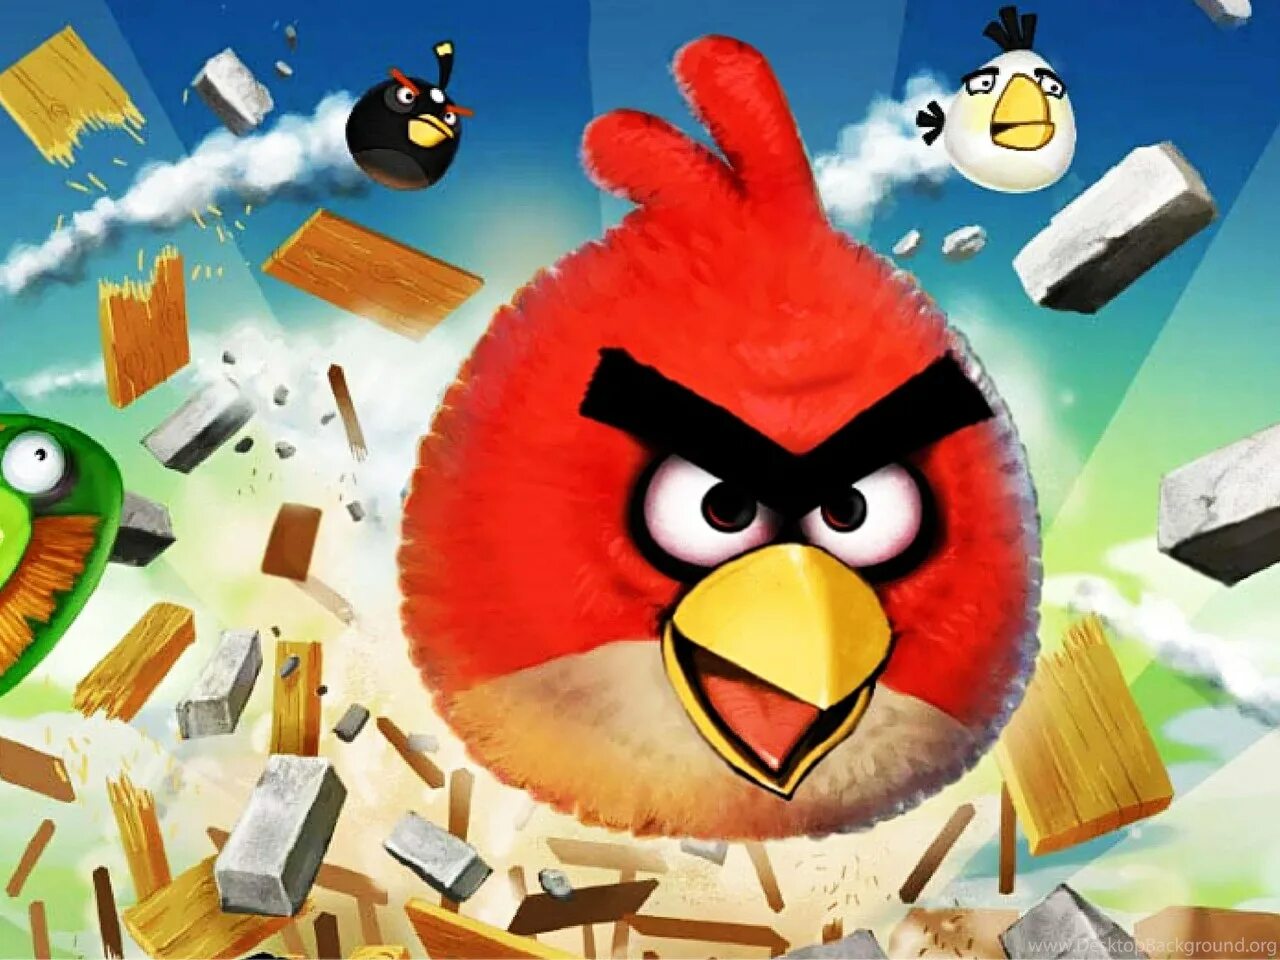 Angry birds versions. Игра Angry Birds Classic. Angry Birds 2 игра. Rovio Энгри бердз. Энгри бердз Ледяная птица.